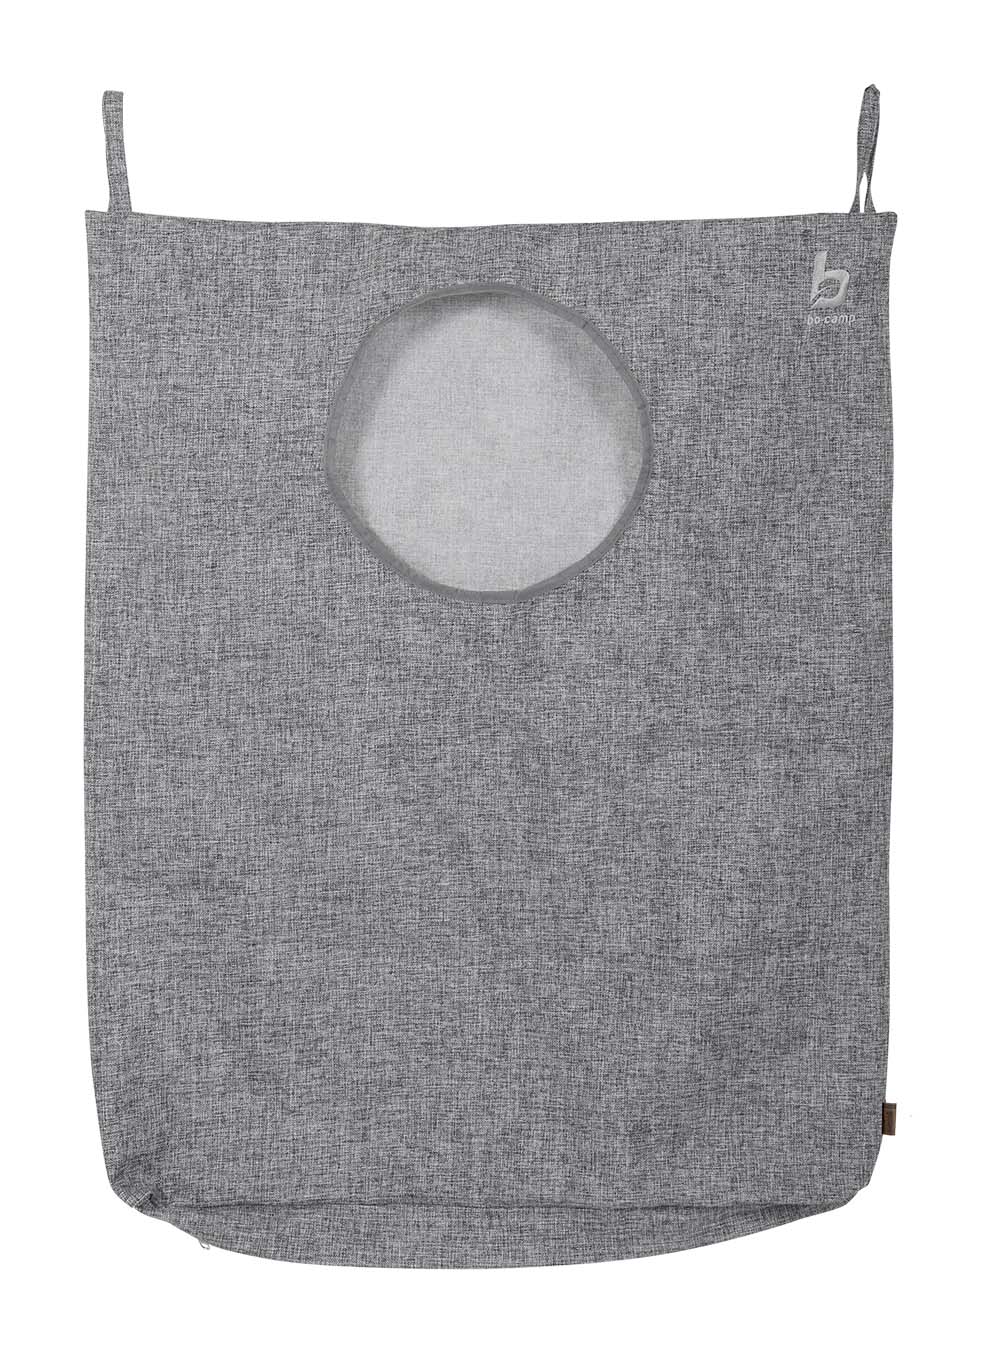 Bo-Camp - Urban Outdoor collection - Laundry bag - Lanes - Grey